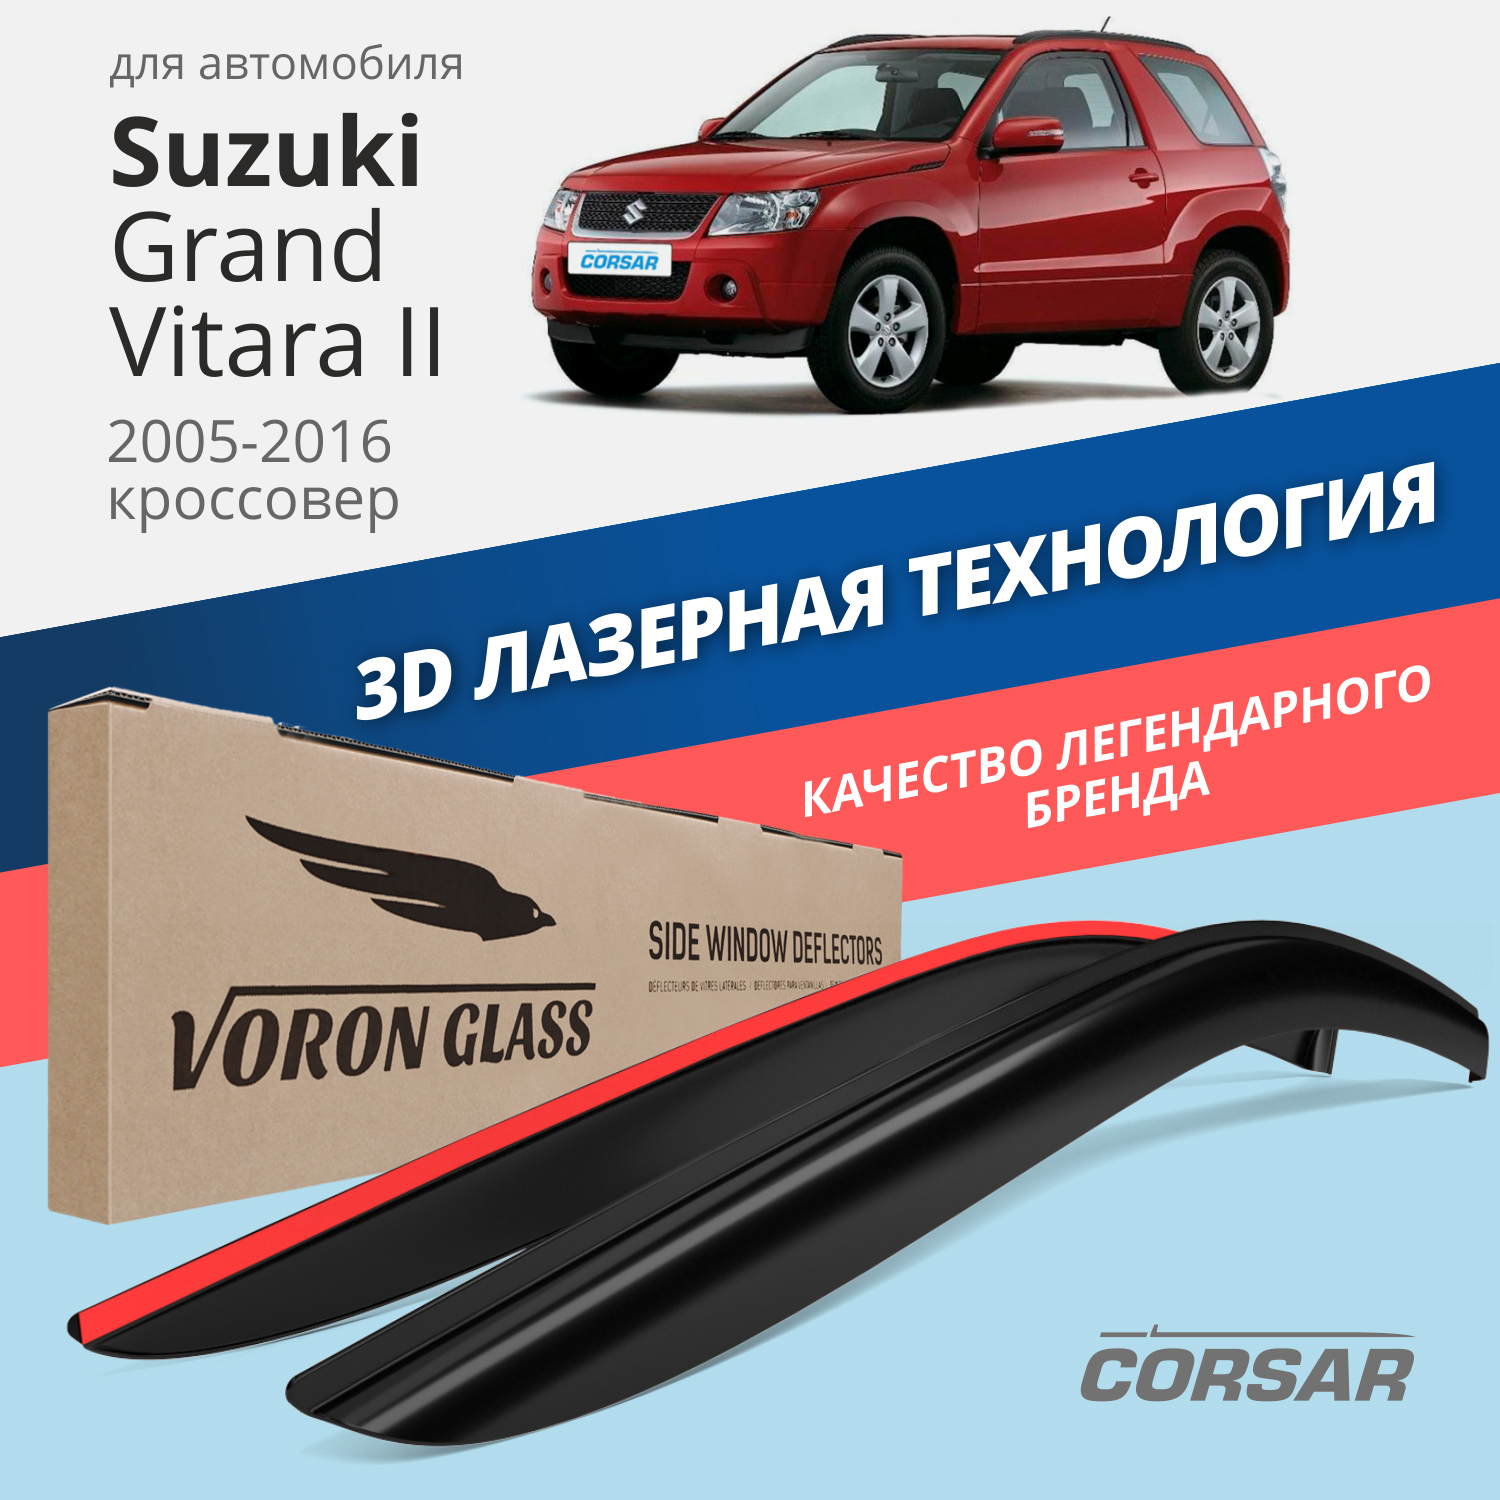 Дефлекторы окон Voron Glass серия Corsar для Suzuki Grand Vitara II 2005-2016 2 шт